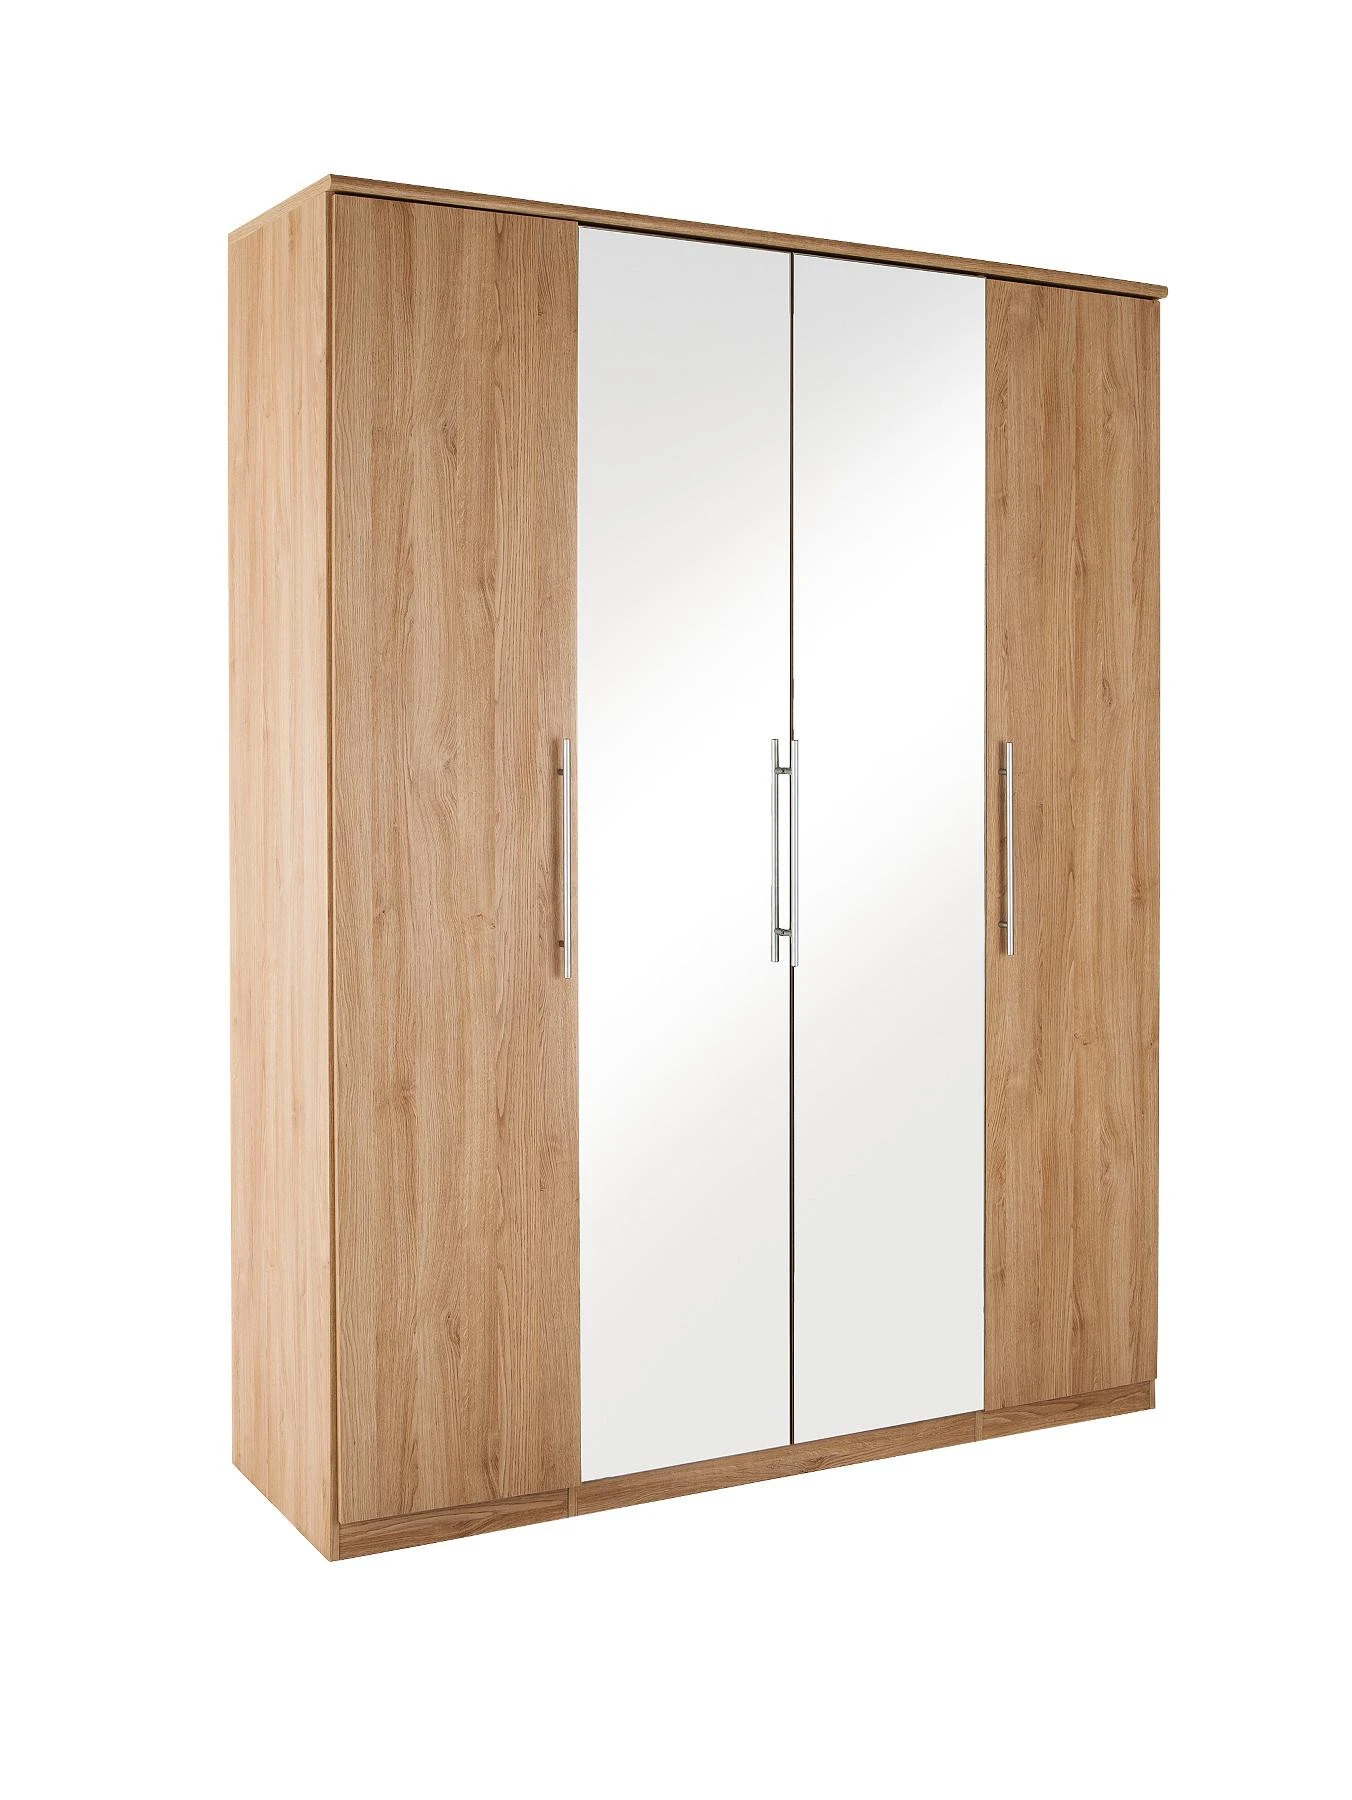 Modern MDF wooden bedroom wardrobe closet factory price